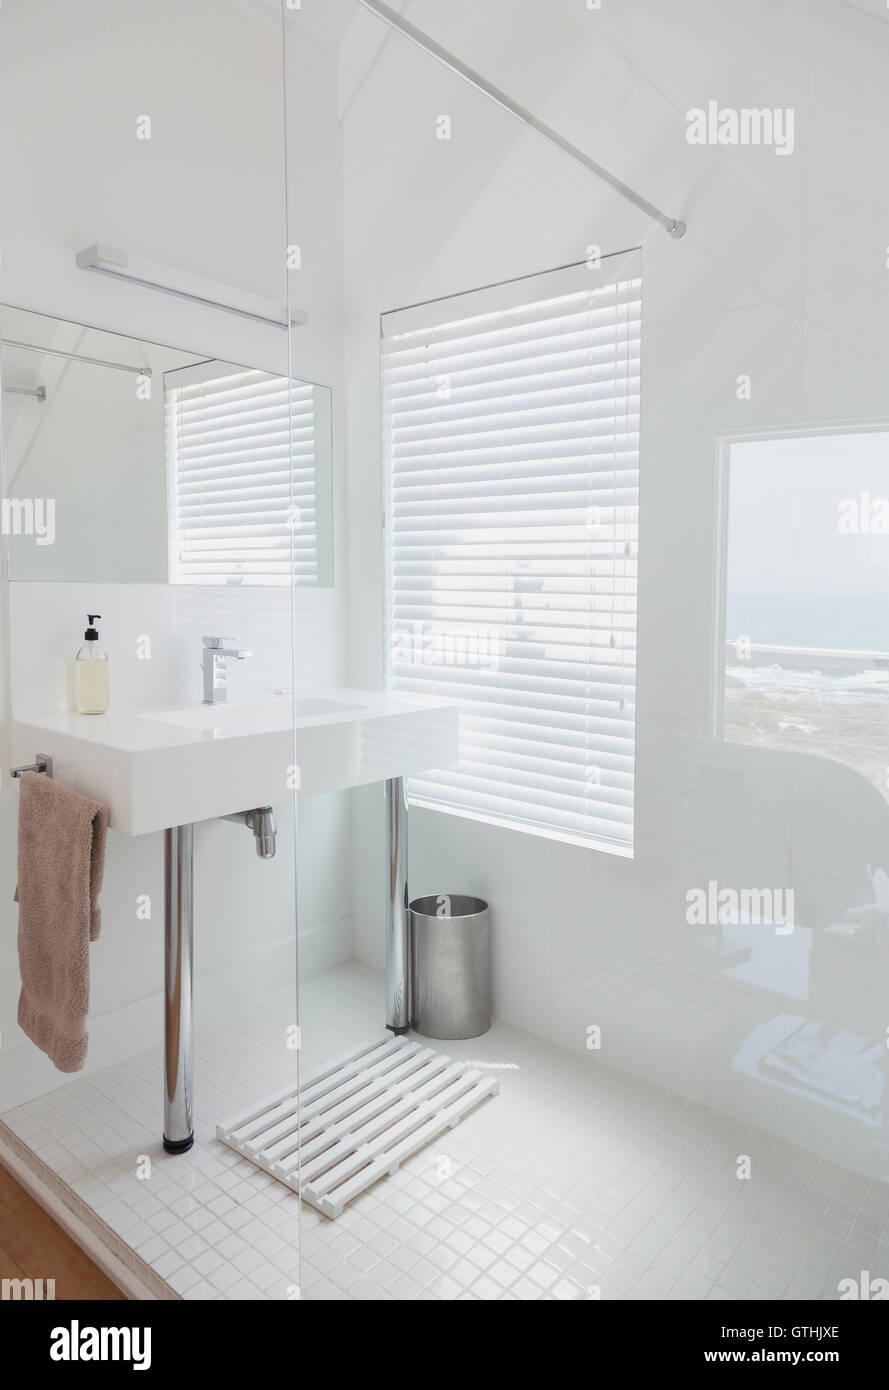 Modern white bathroom home showcase interior Stock Photo